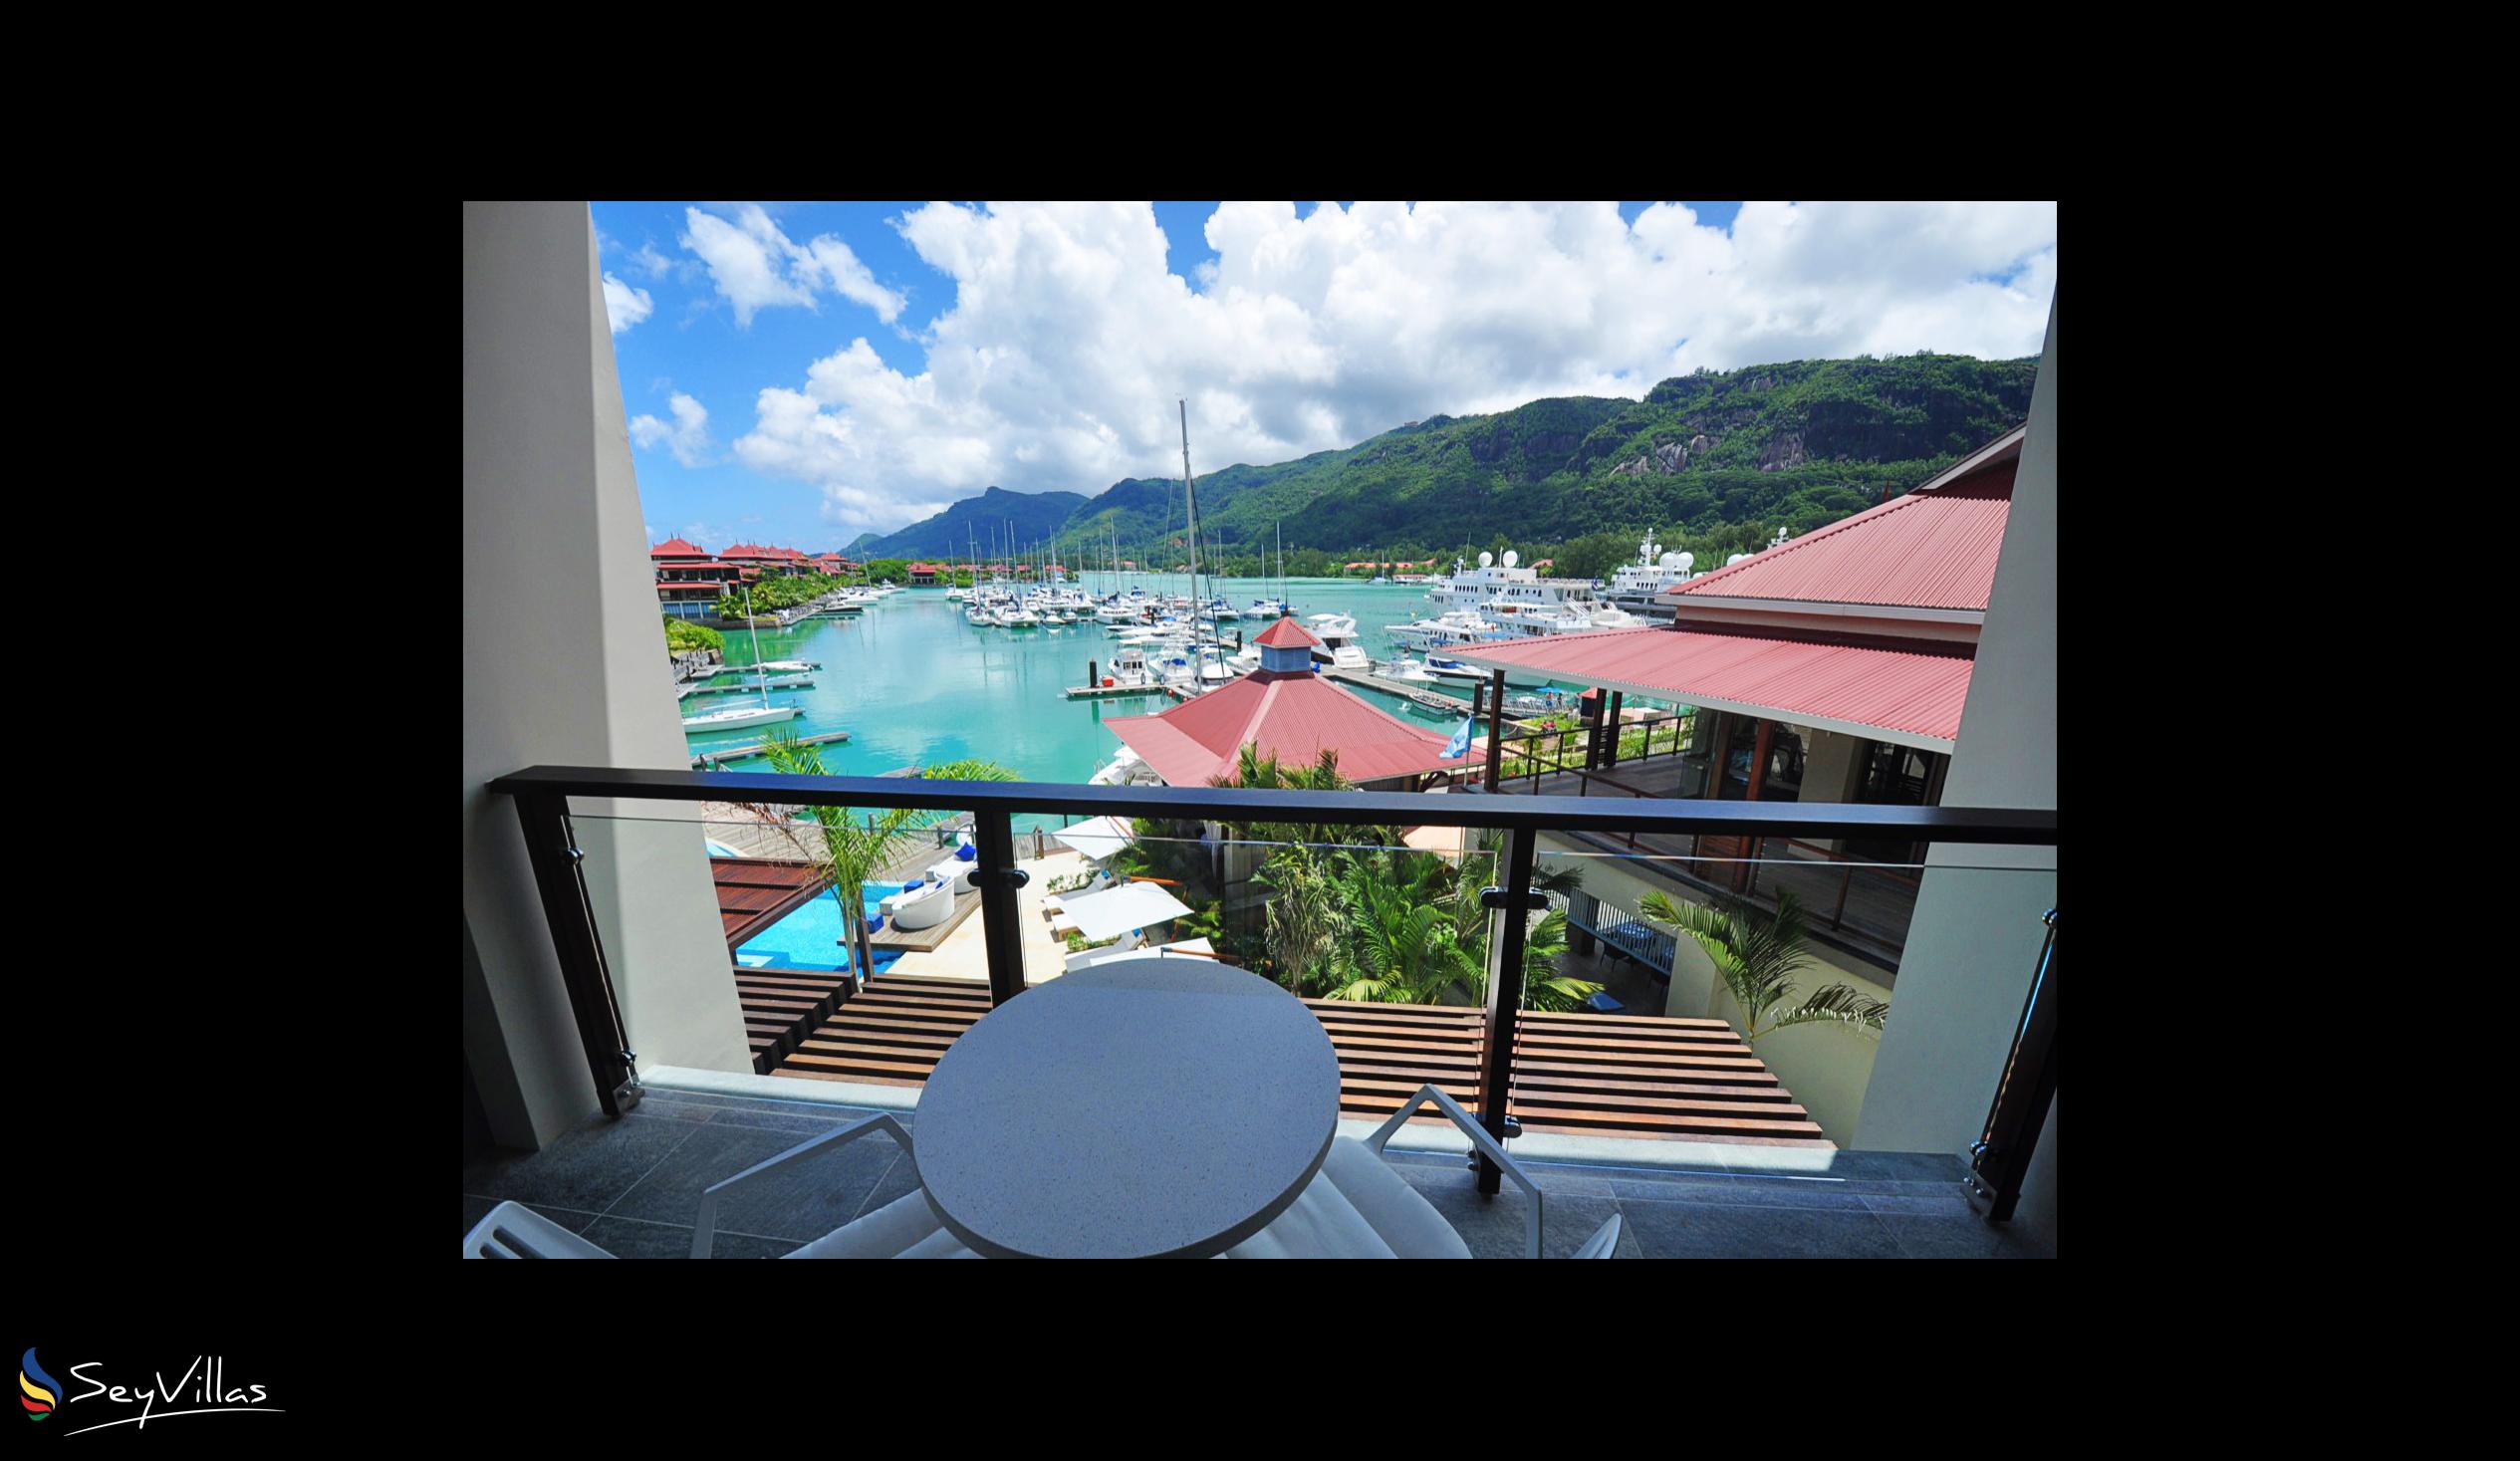 Foto 37: Eden Bleu Hotel - Camera Deluxe Vista Porto - Mahé (Seychelles)